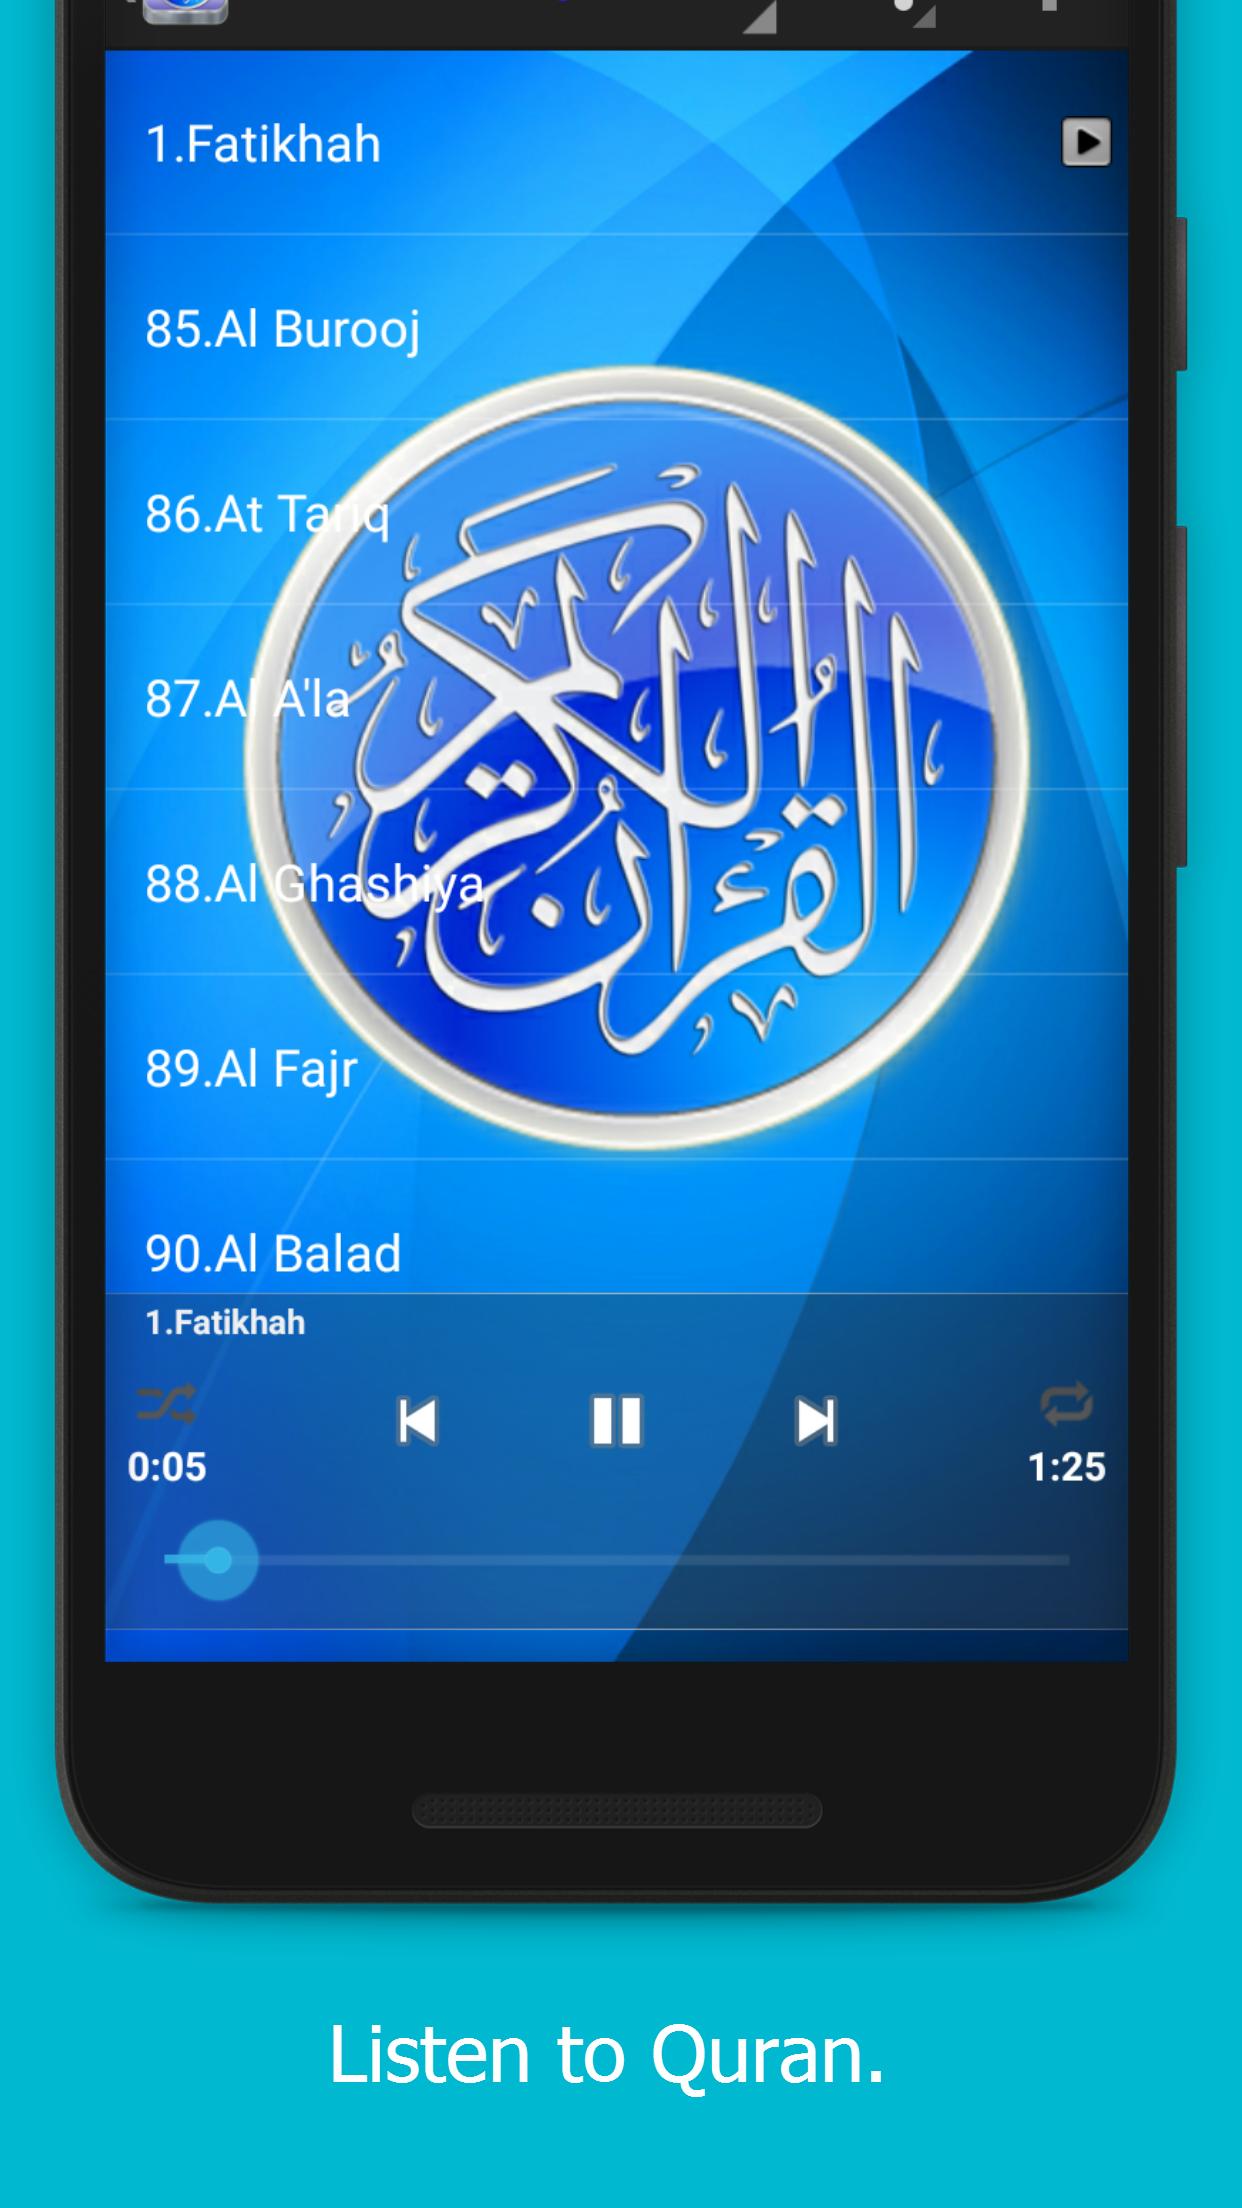 AlQuran 30 Juz Offline Mp3 for Android - APK Download